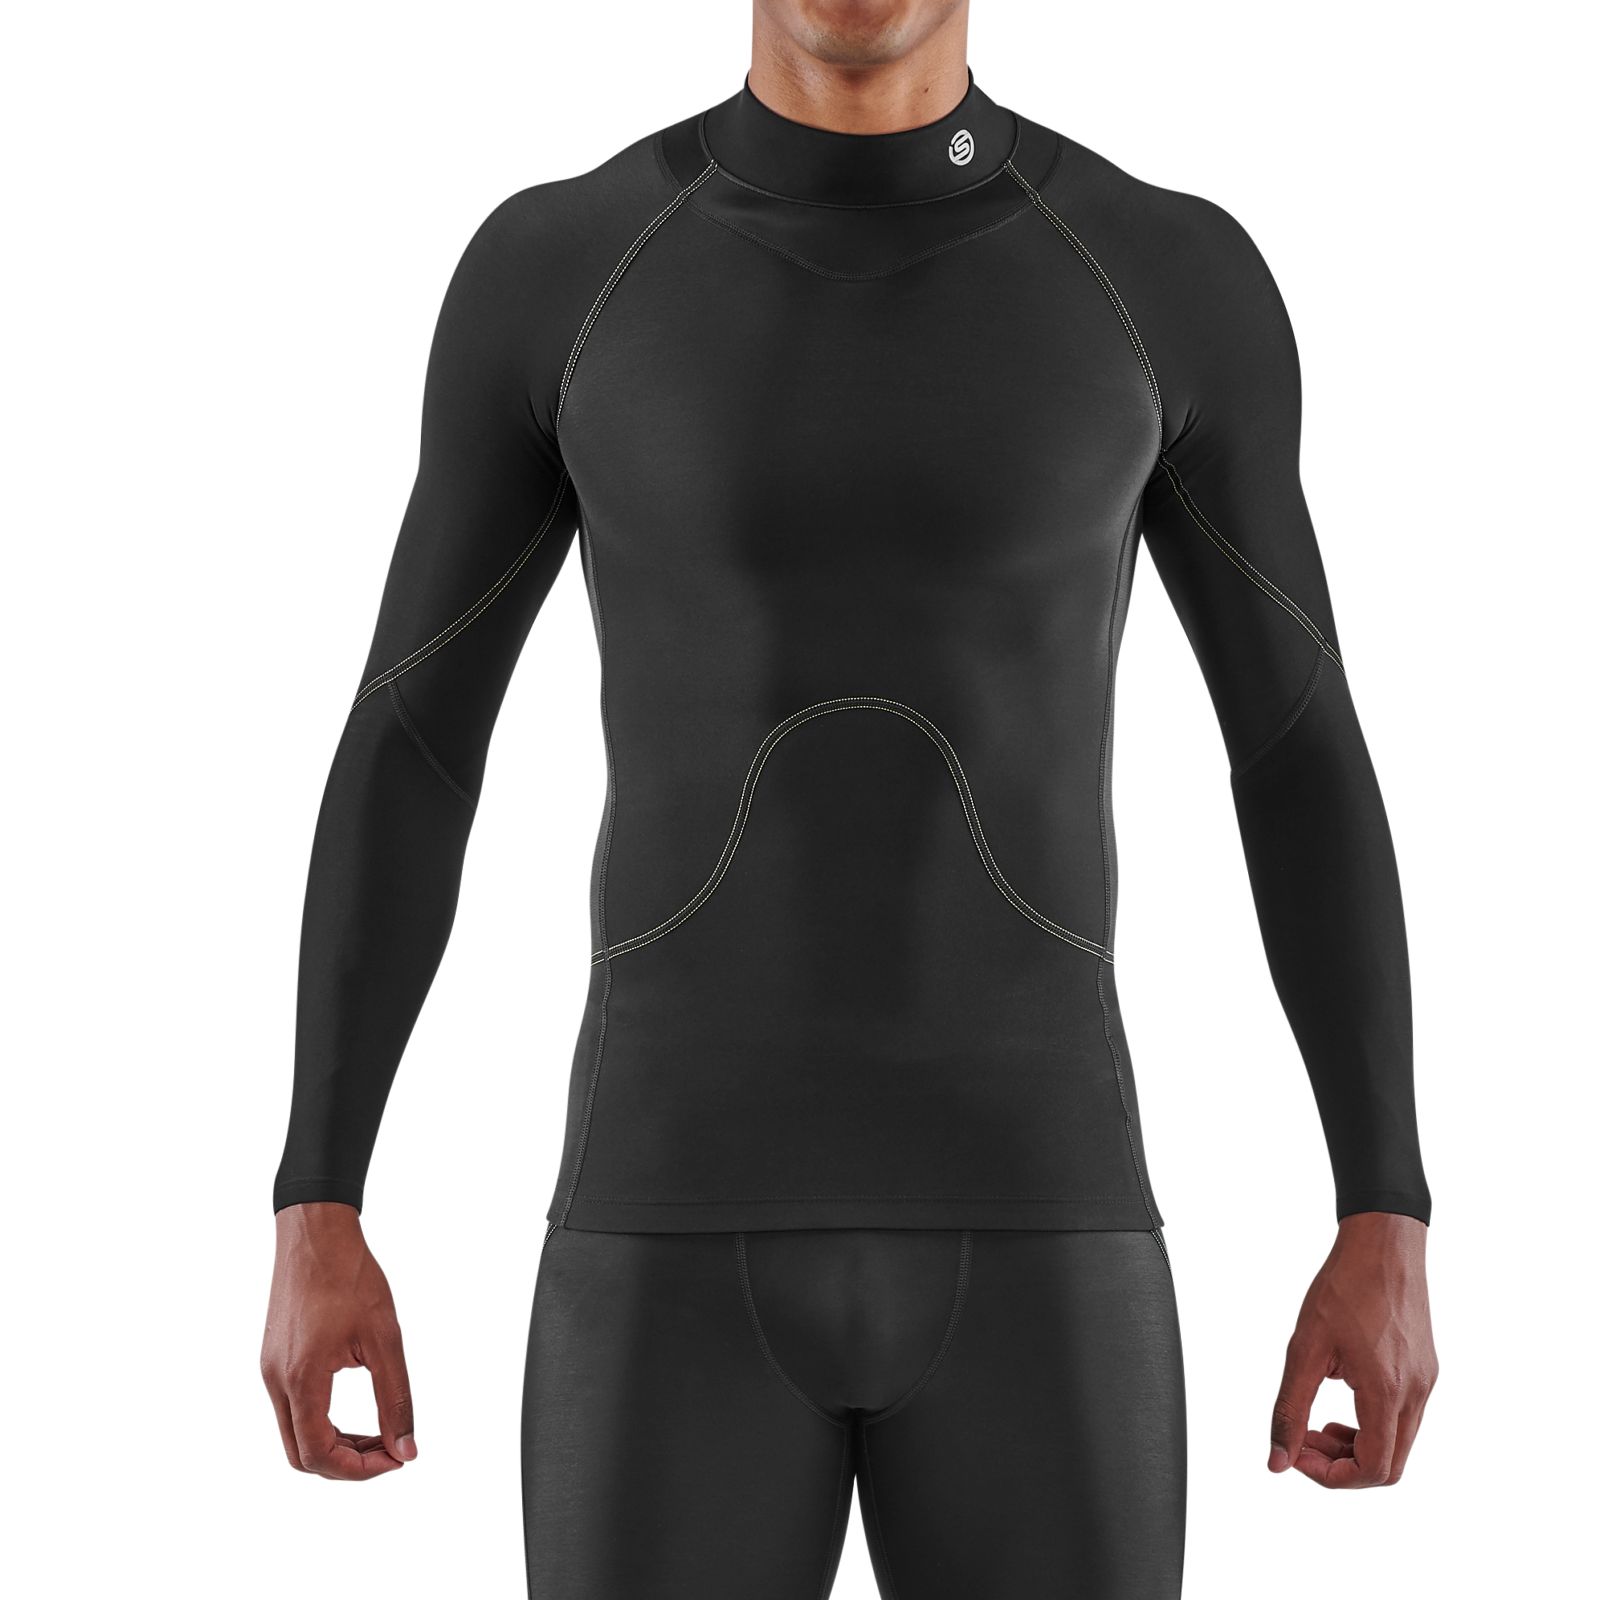 ETAM Warm Me Up Long-sleeved thermal mesh bodysuit